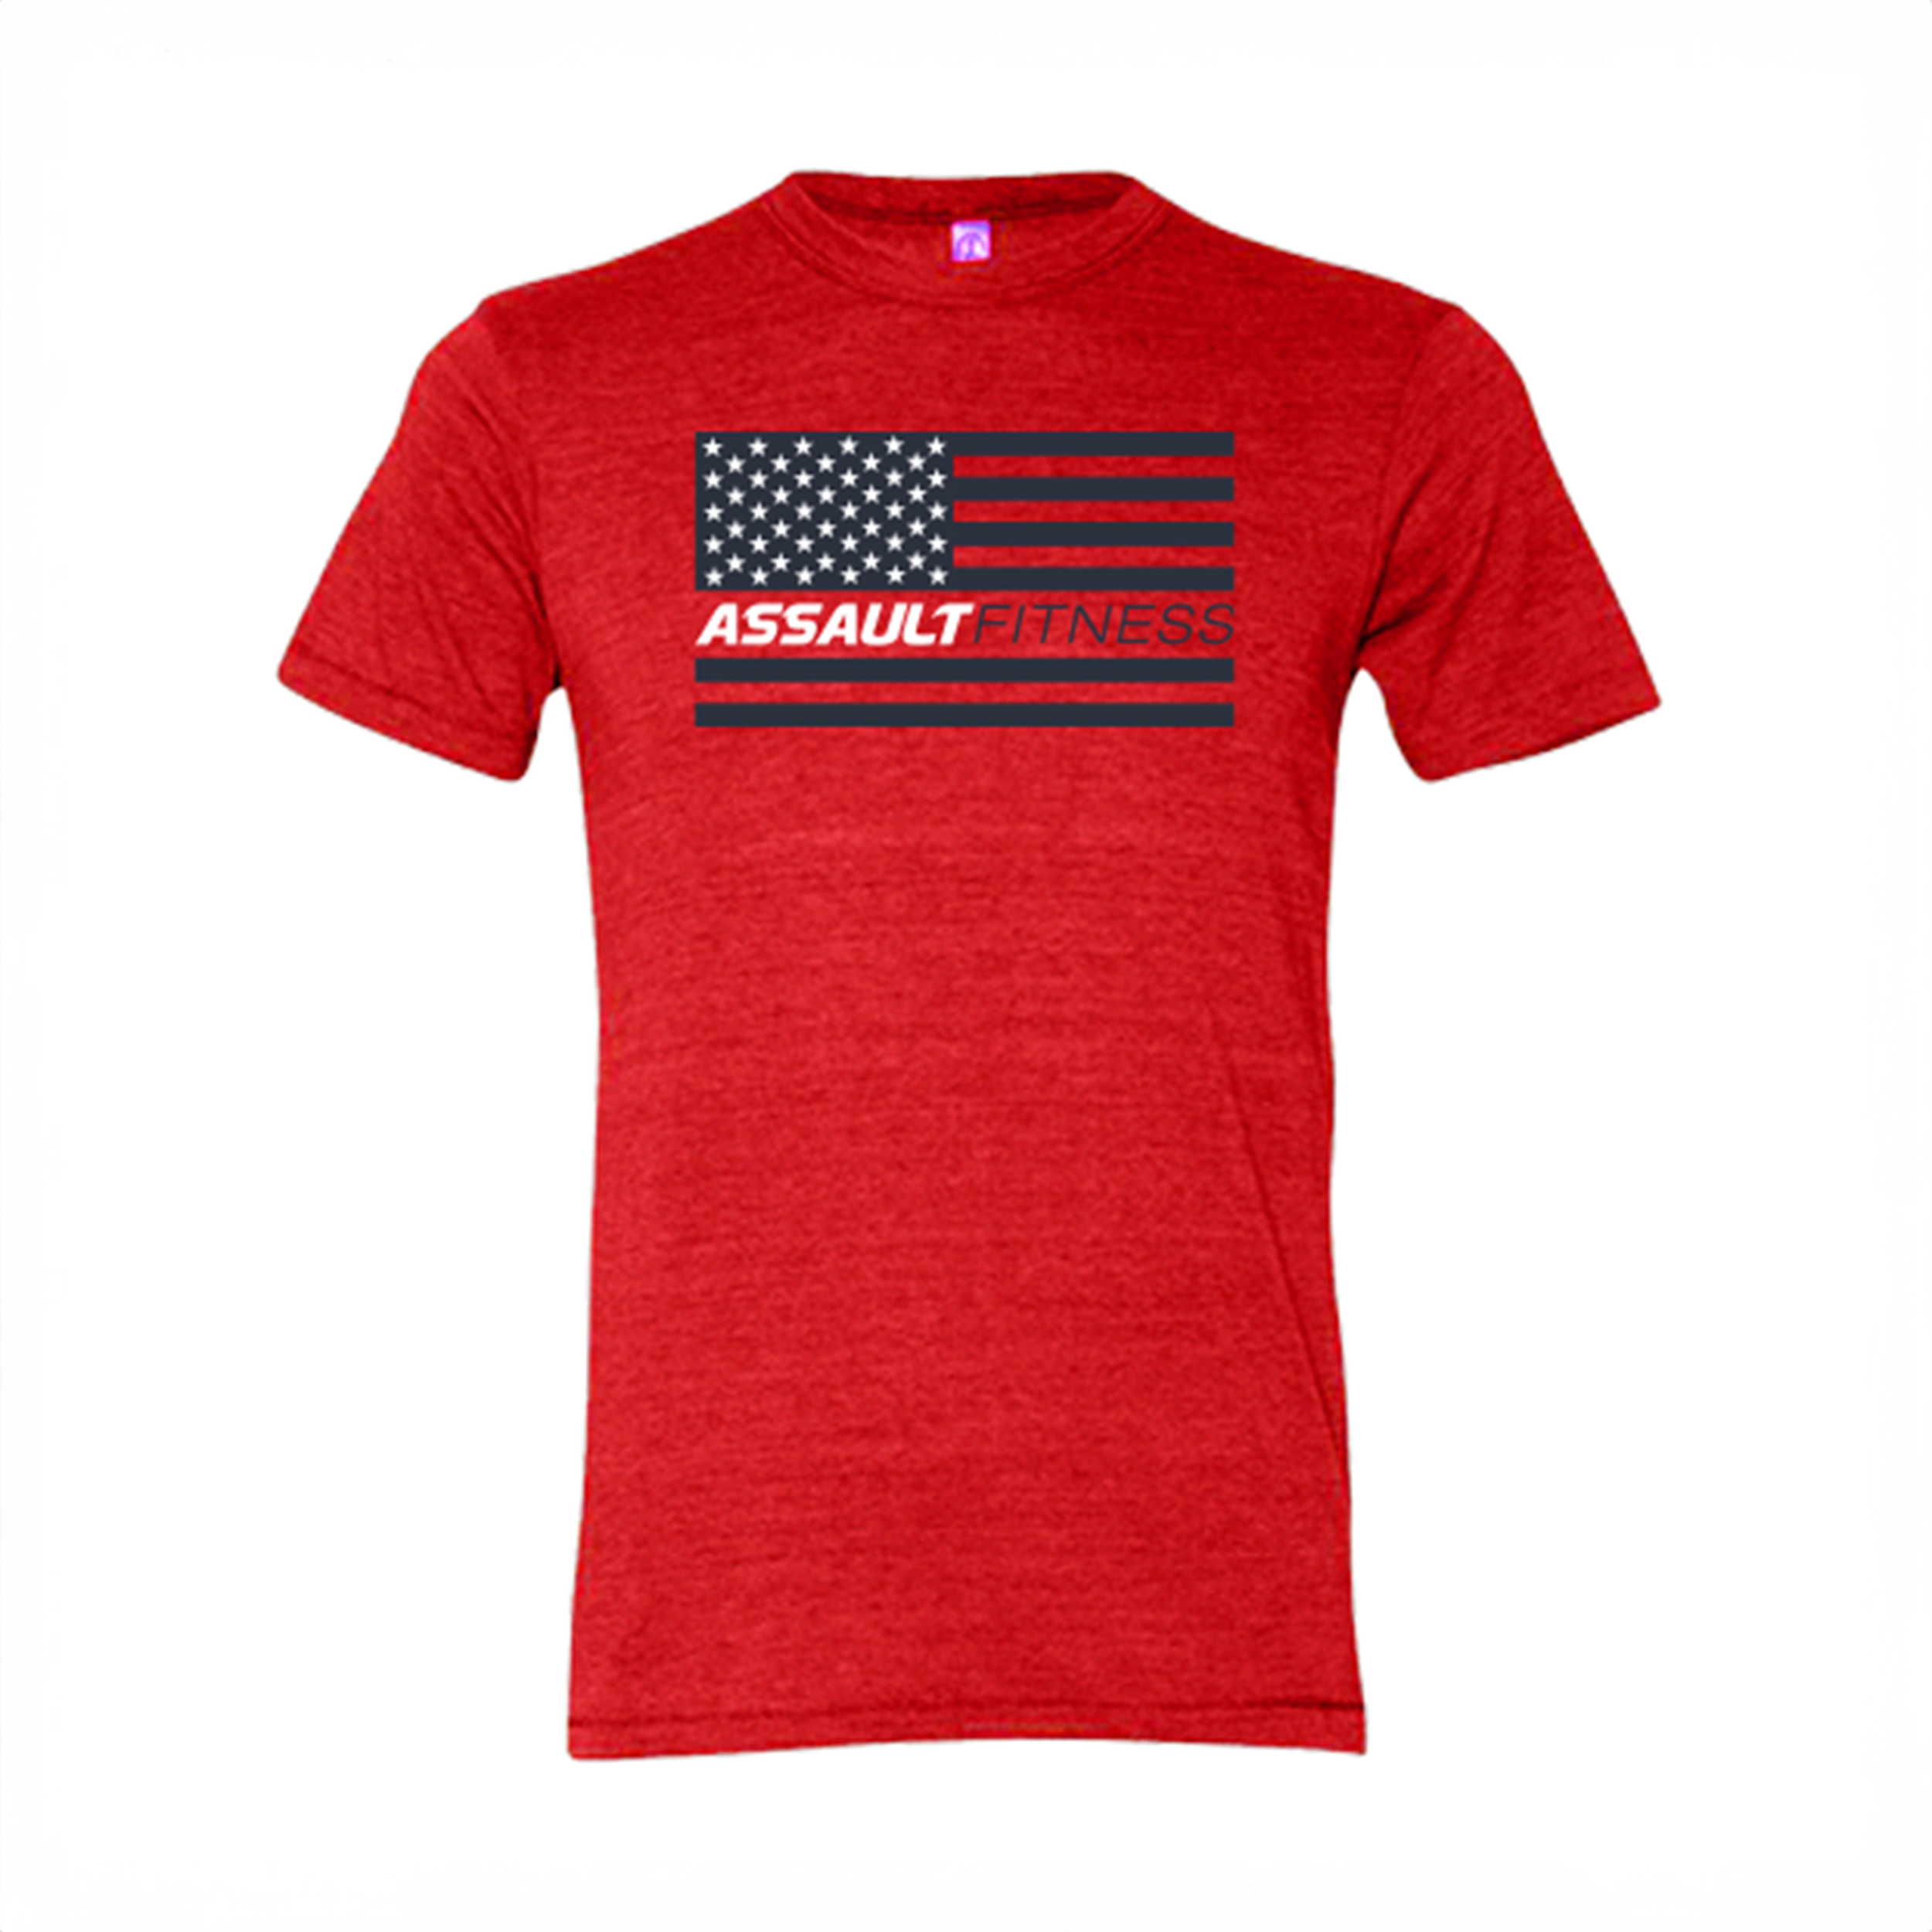 Men's Patriot T-Shirt